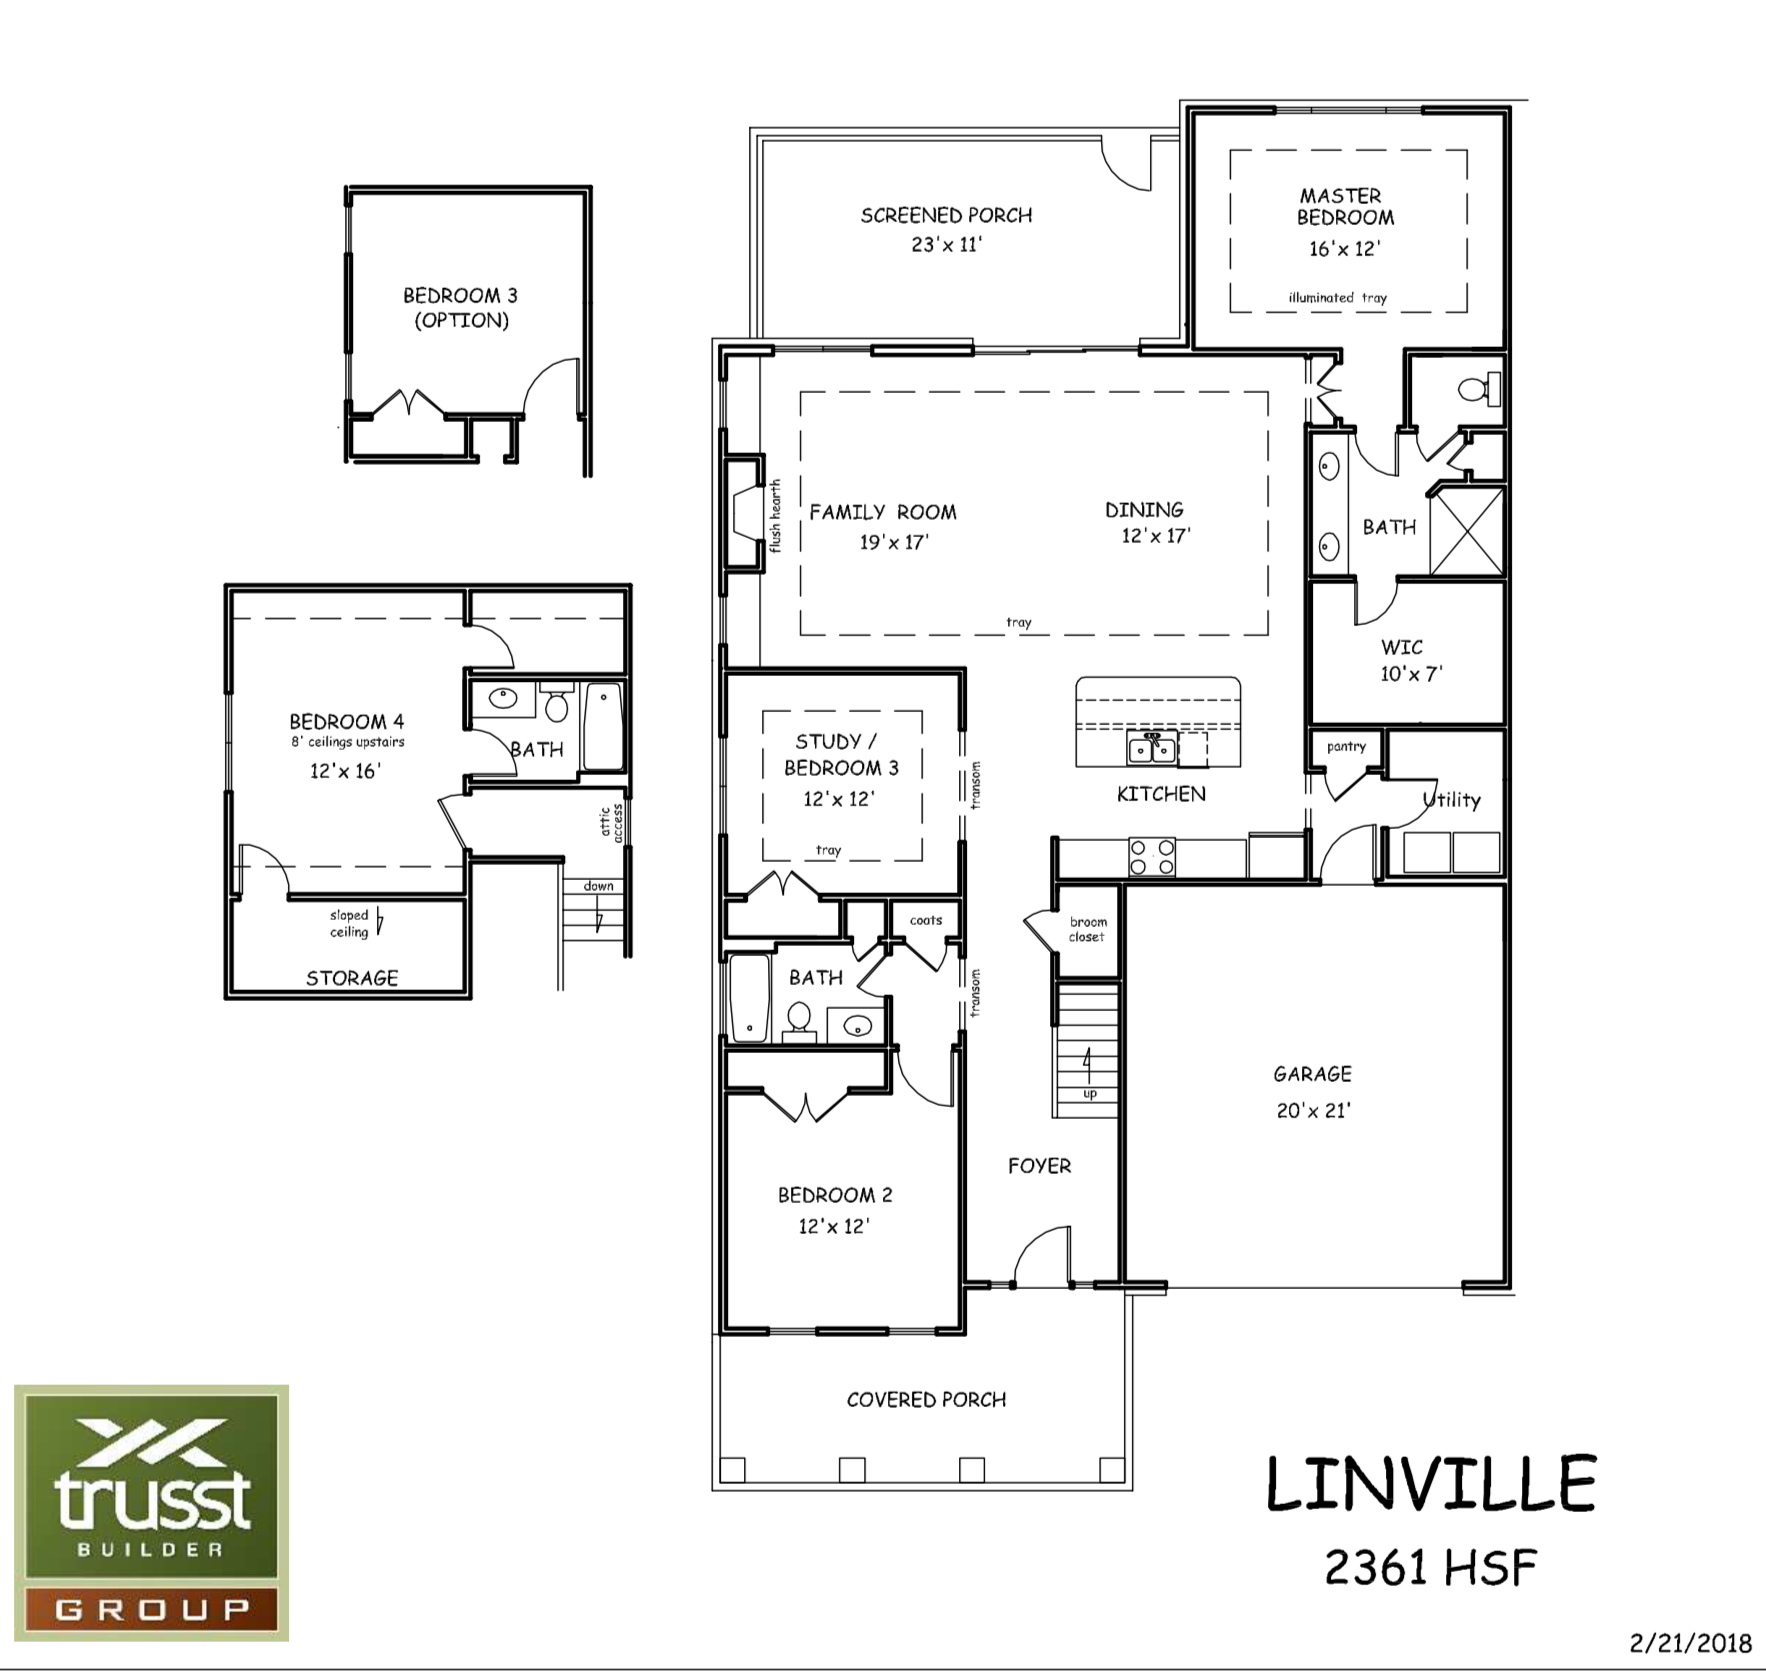 Linville floor plan image